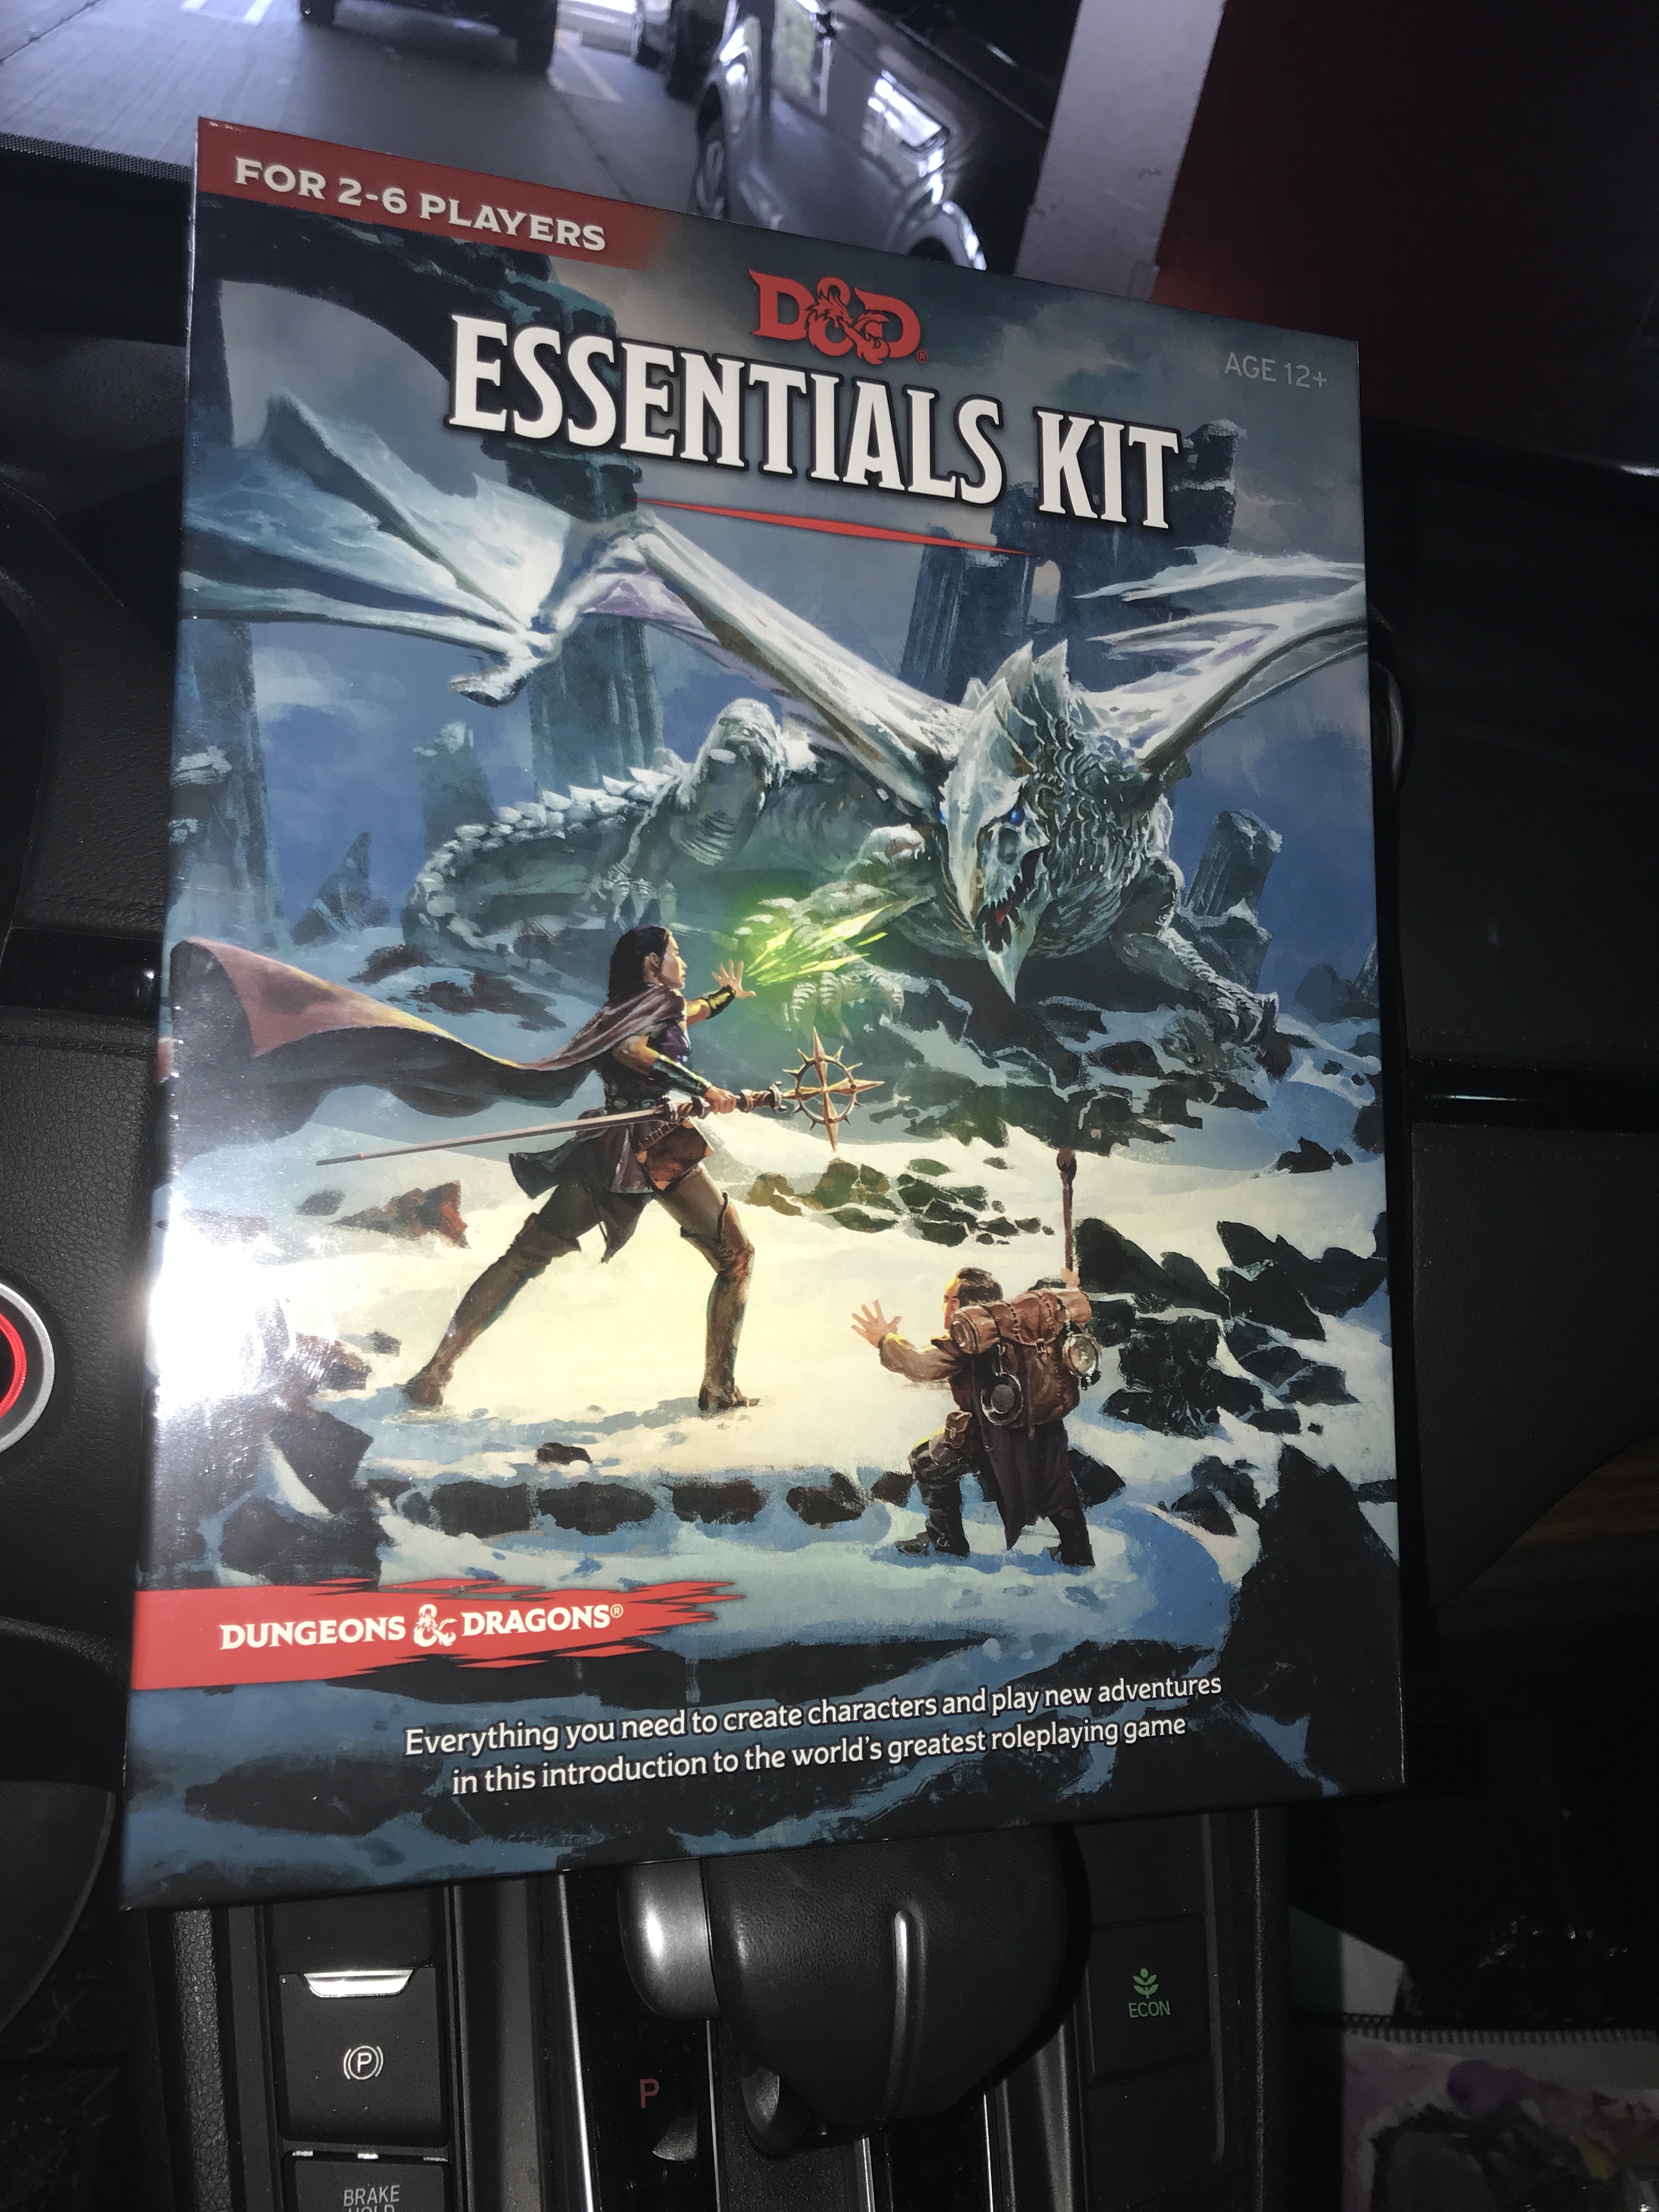 NewbieDM Review: D&D Essentials Kit